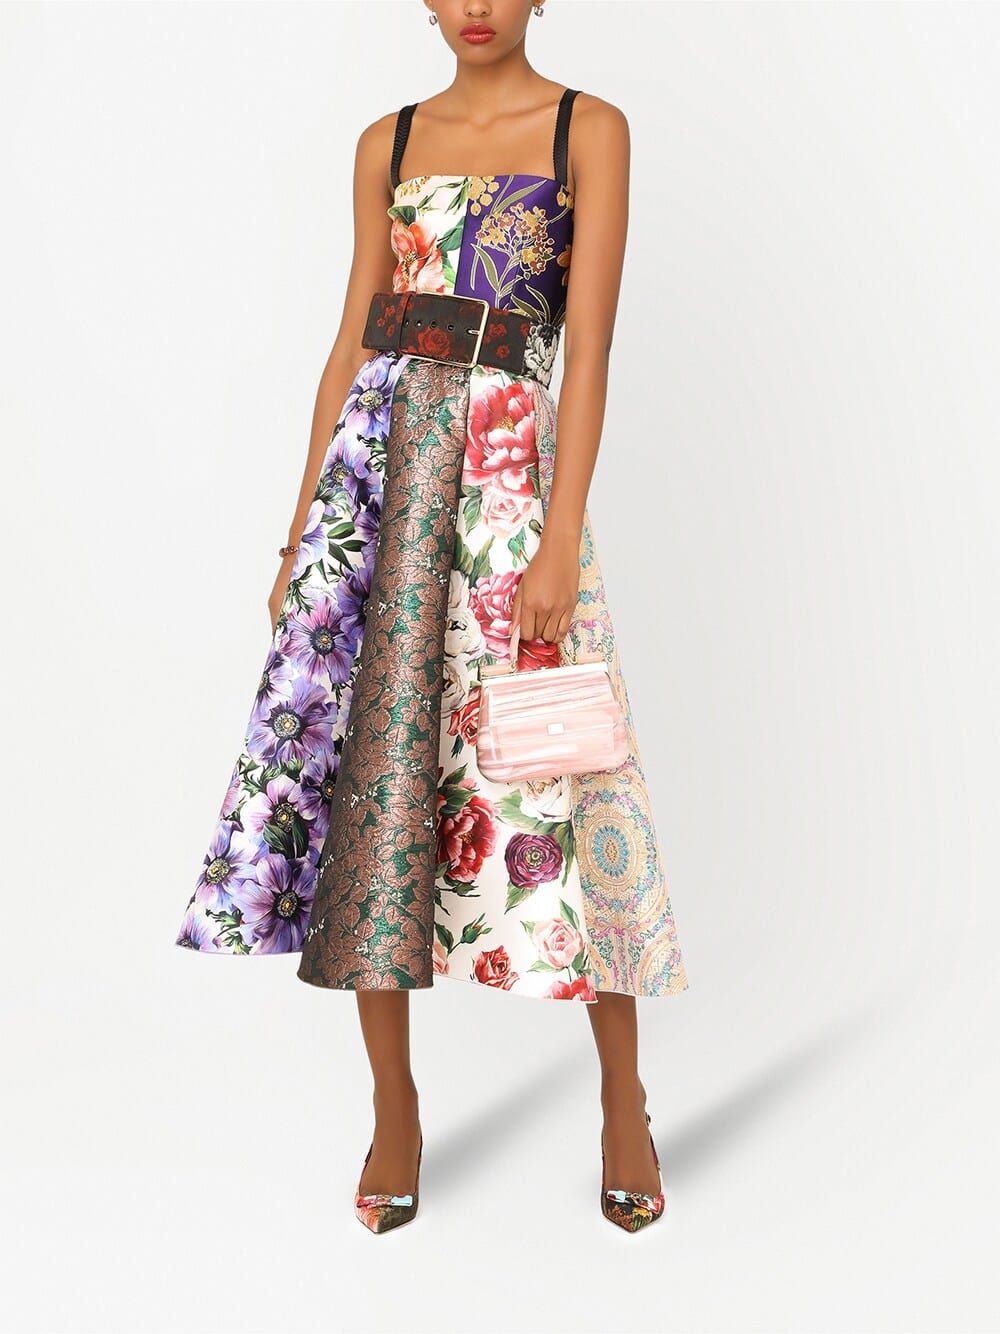 Dolce & Gabbana Patchwork Jacquard-Woven Dress